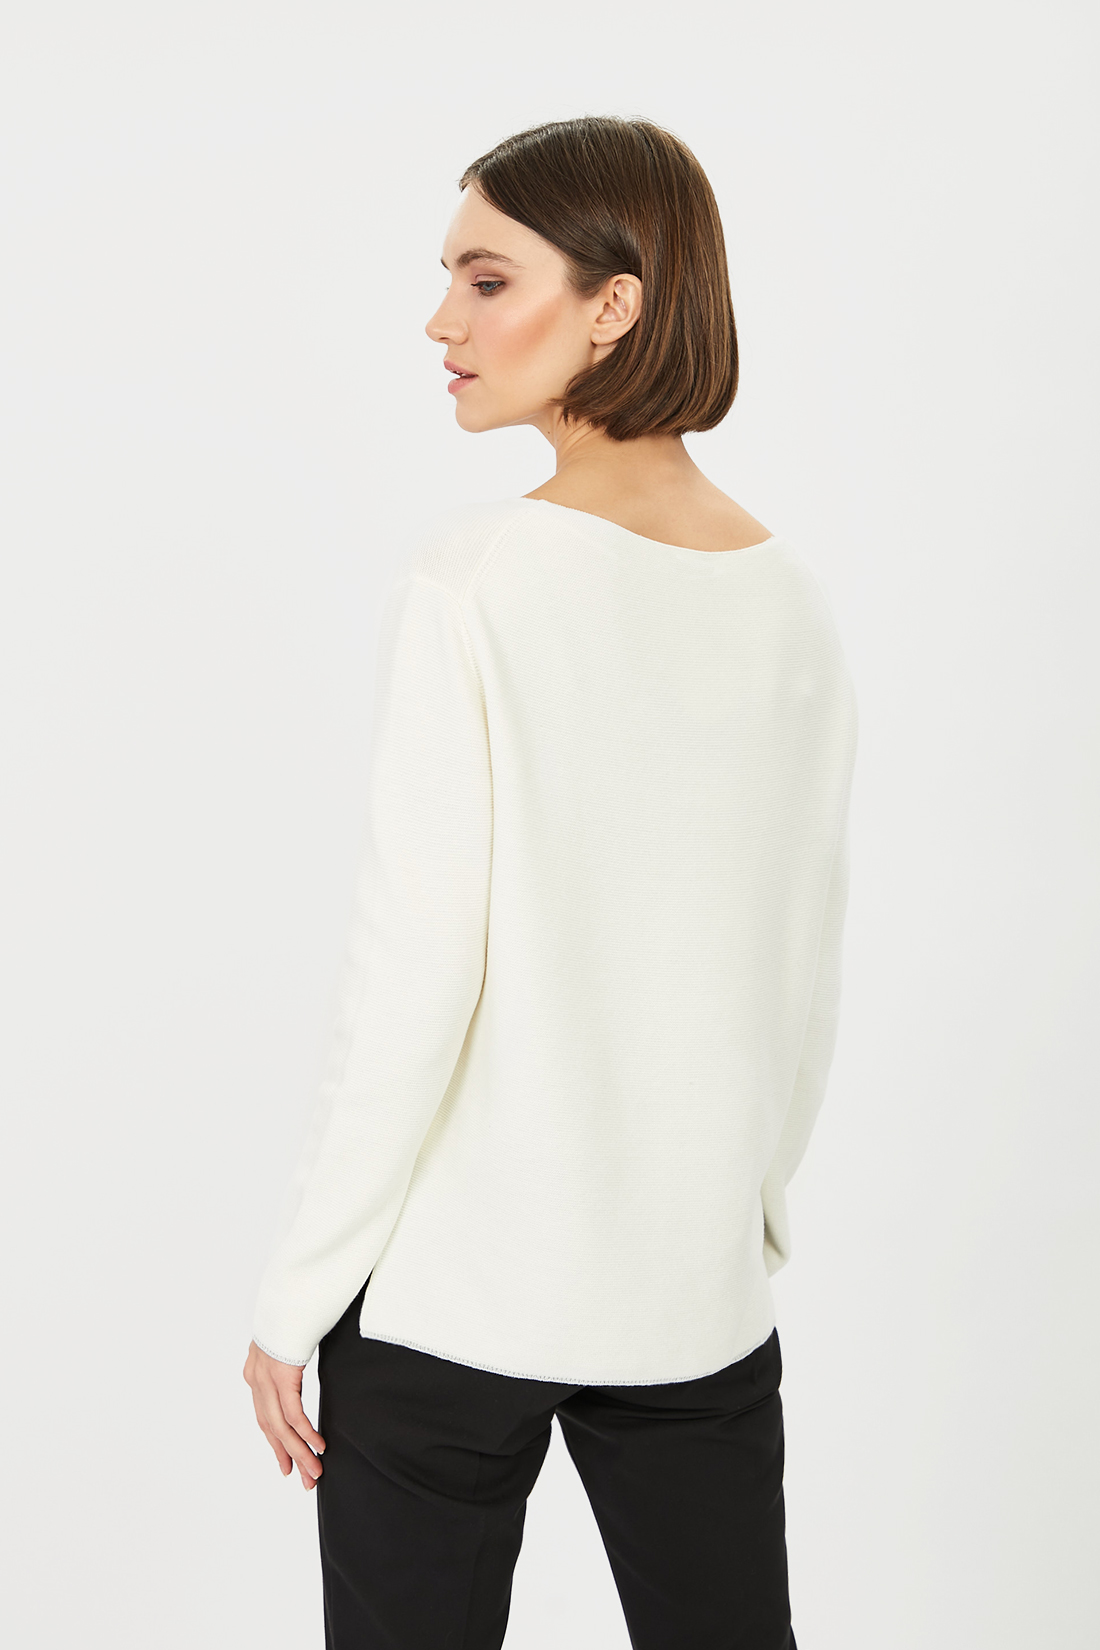 Пуловер с мерцающей отделкой (арт. baon B131028), размер XL, цвет белый Пуловер с мерцающей отделкой (арт. baon B131028) - фото 2